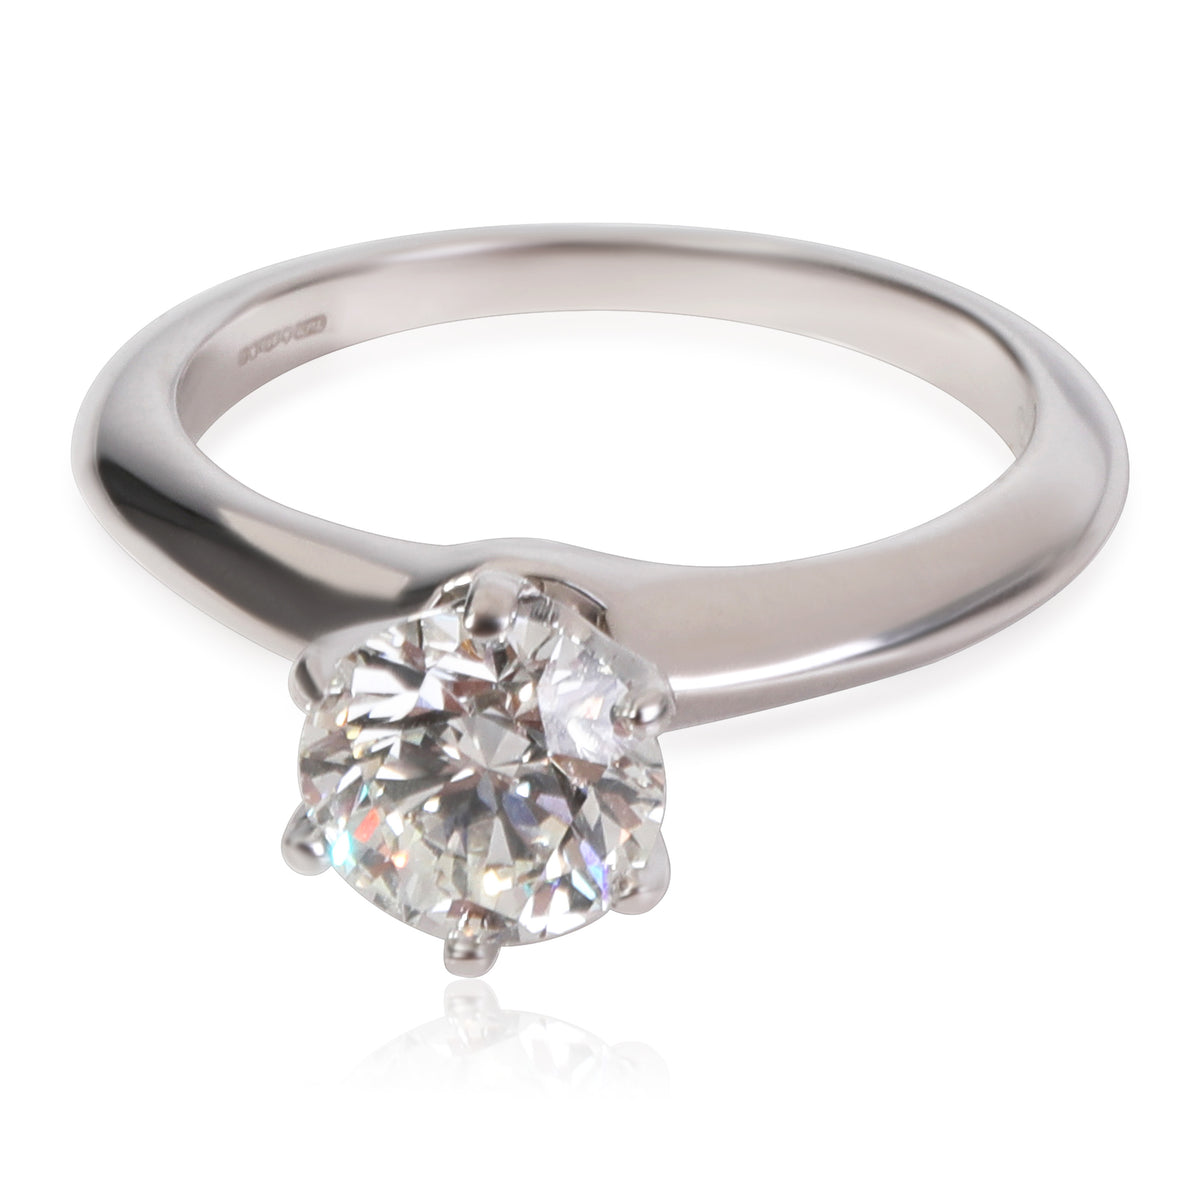 Tiffany & Co. Diamond Engagement Ring in Platinum (1.11 ct H/VS1)